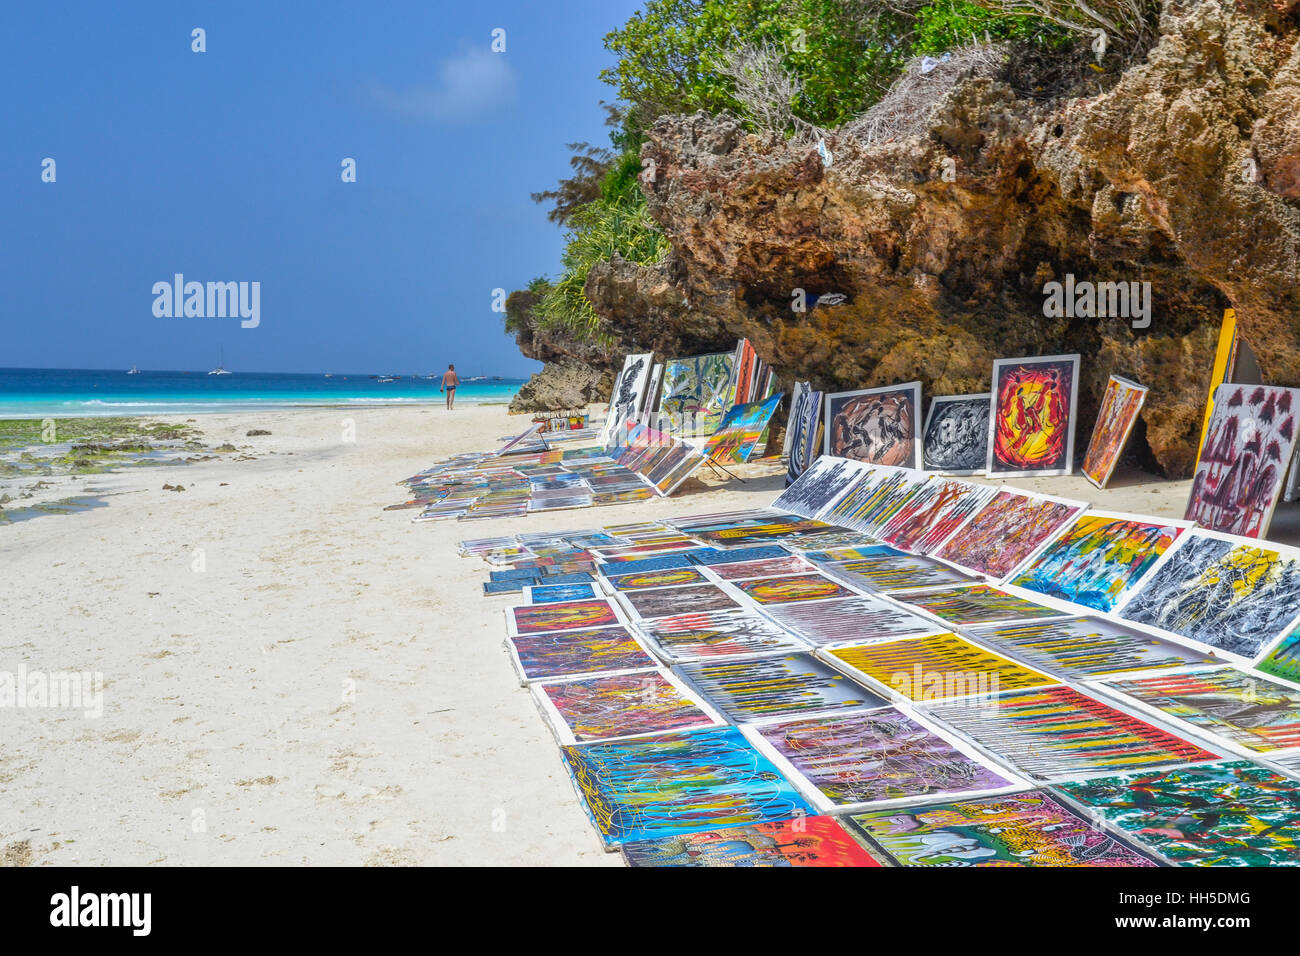 Zanzibar art, selling on the beach, next to blue ocean Stock Photo